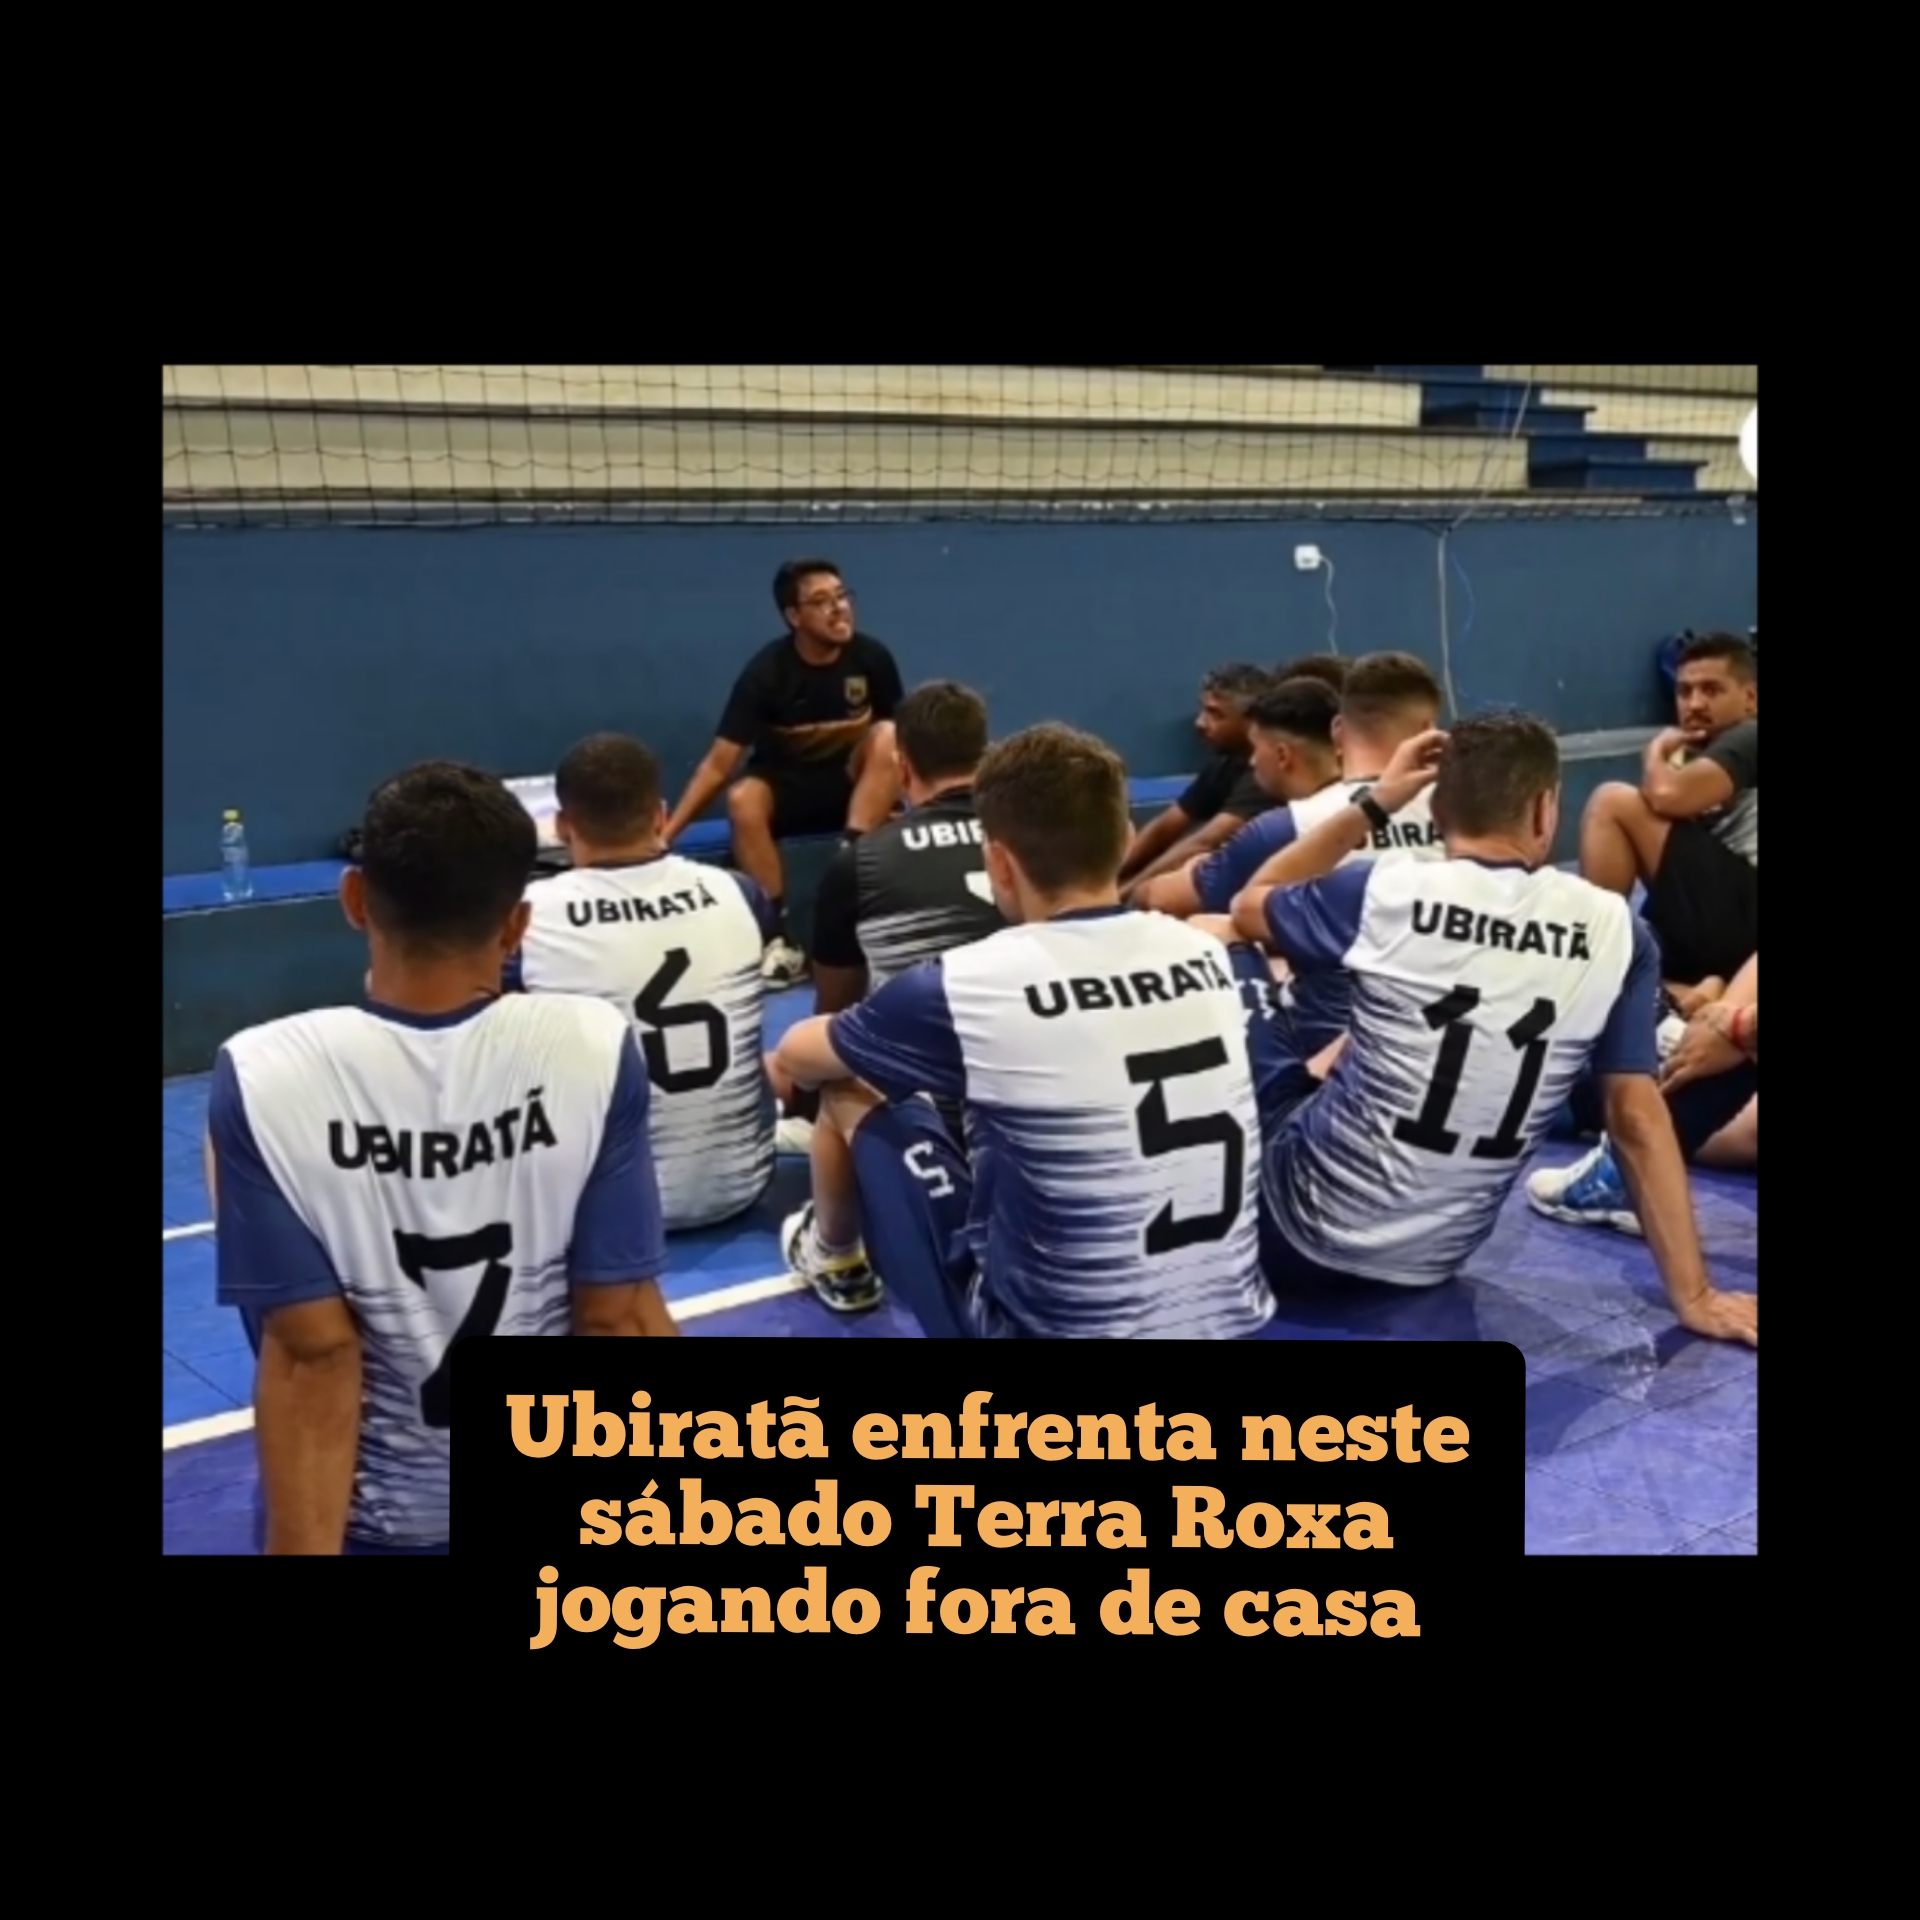 Ubiratã Futsal enfrenta neste sábado a equipe de Terra Roxa, fora de casa